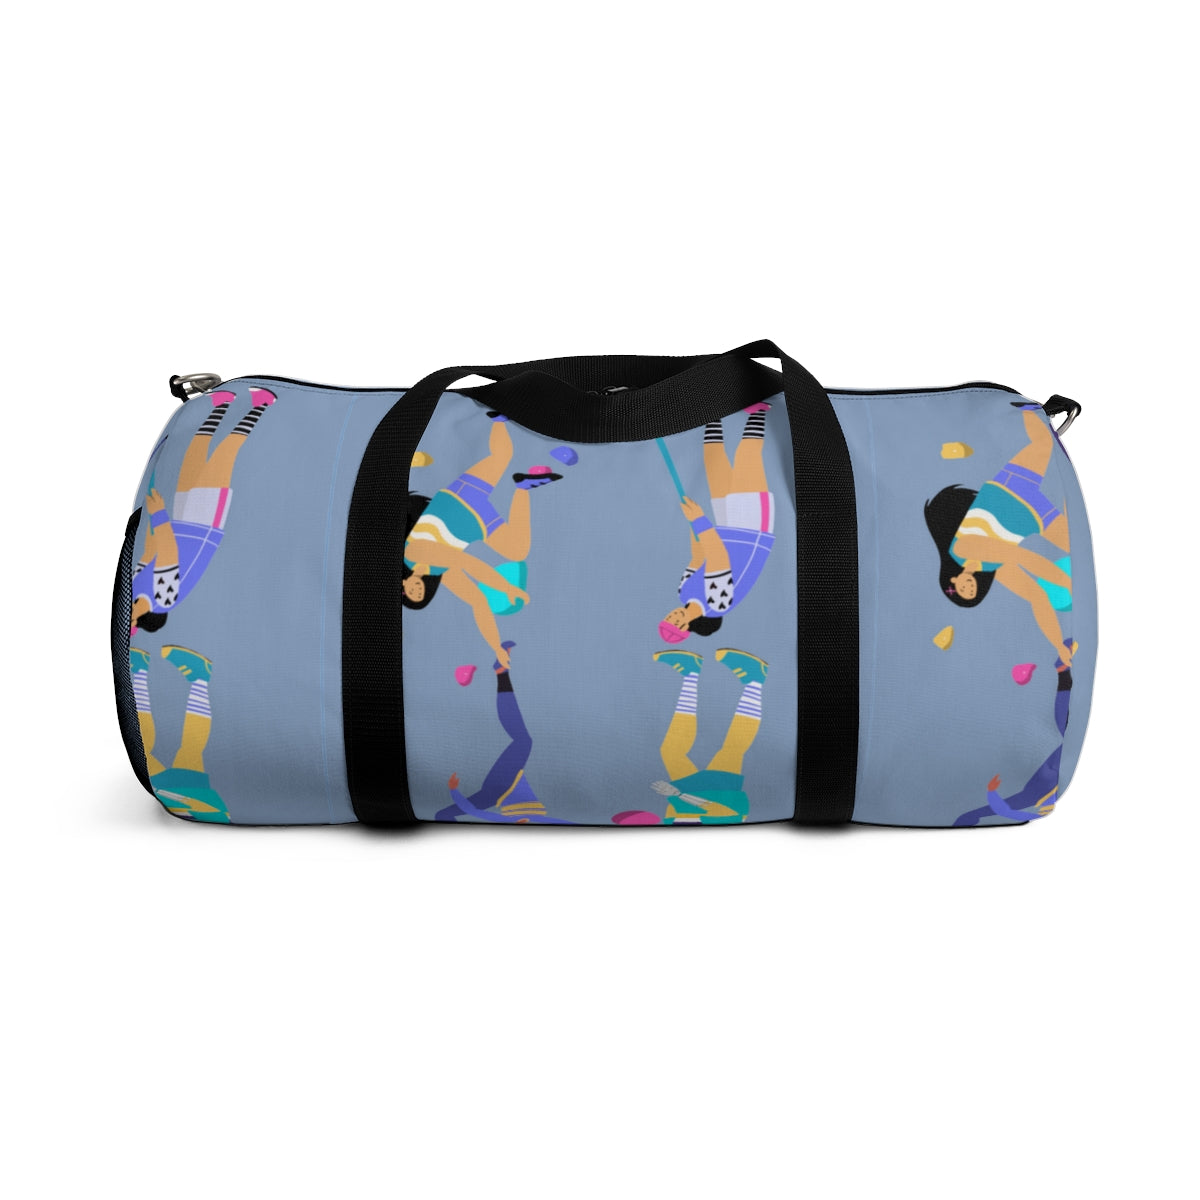 SPORTS Gym Duffle Bag, Weekender Bag, Travel Carry On Bag For Sports Gym Lovers, Groomsmen Gift|  Artzira